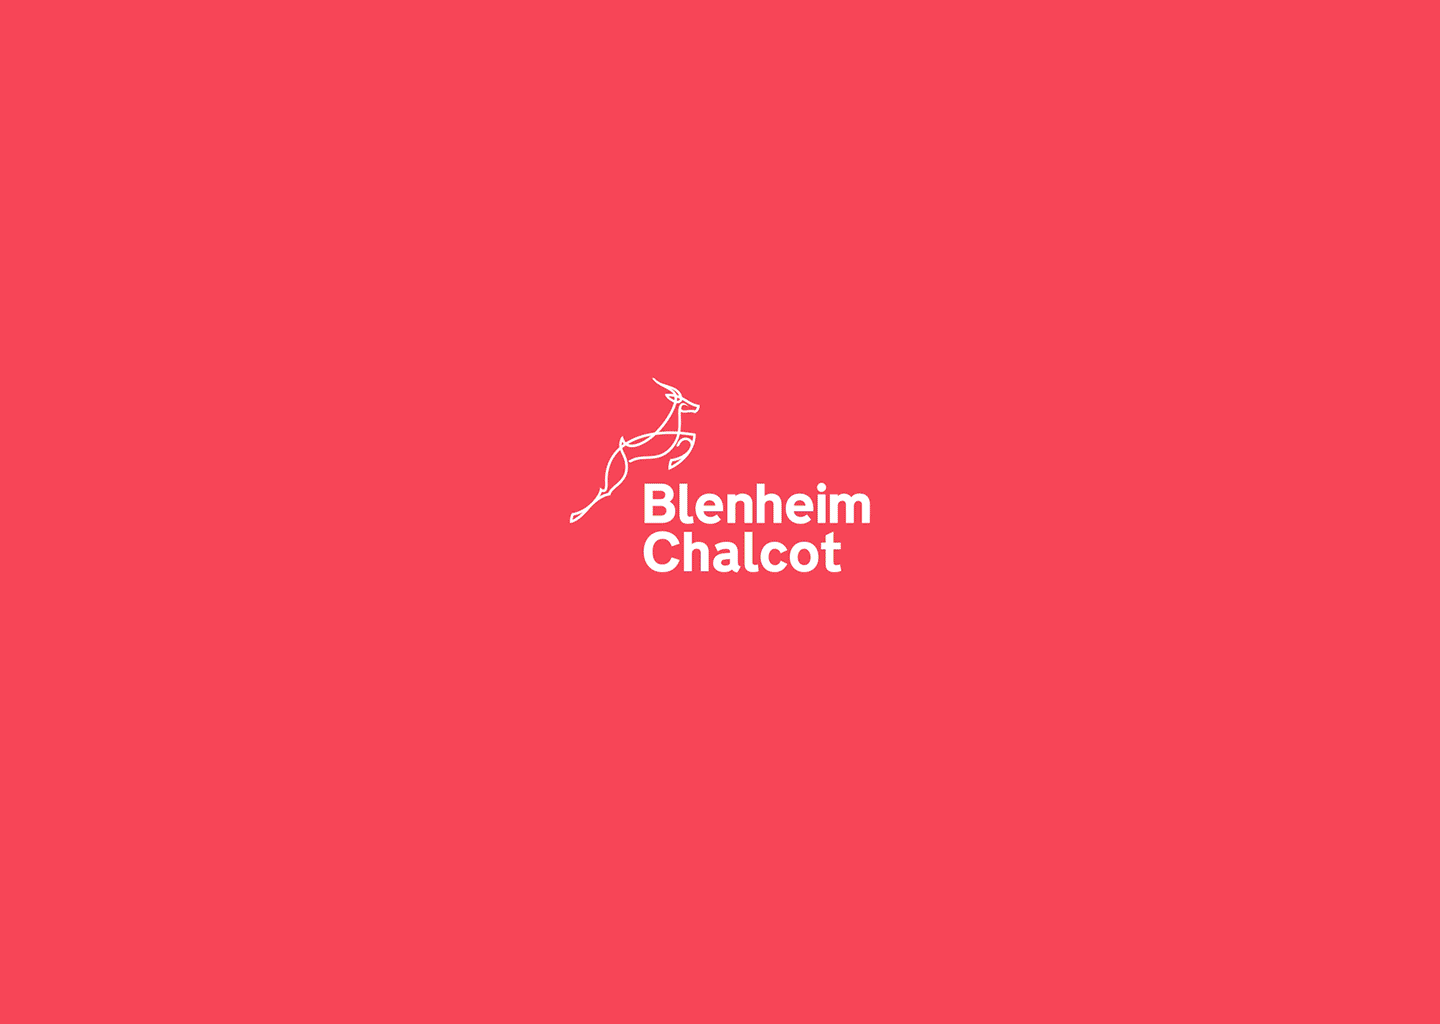 Blenheim Chalcot website animation.